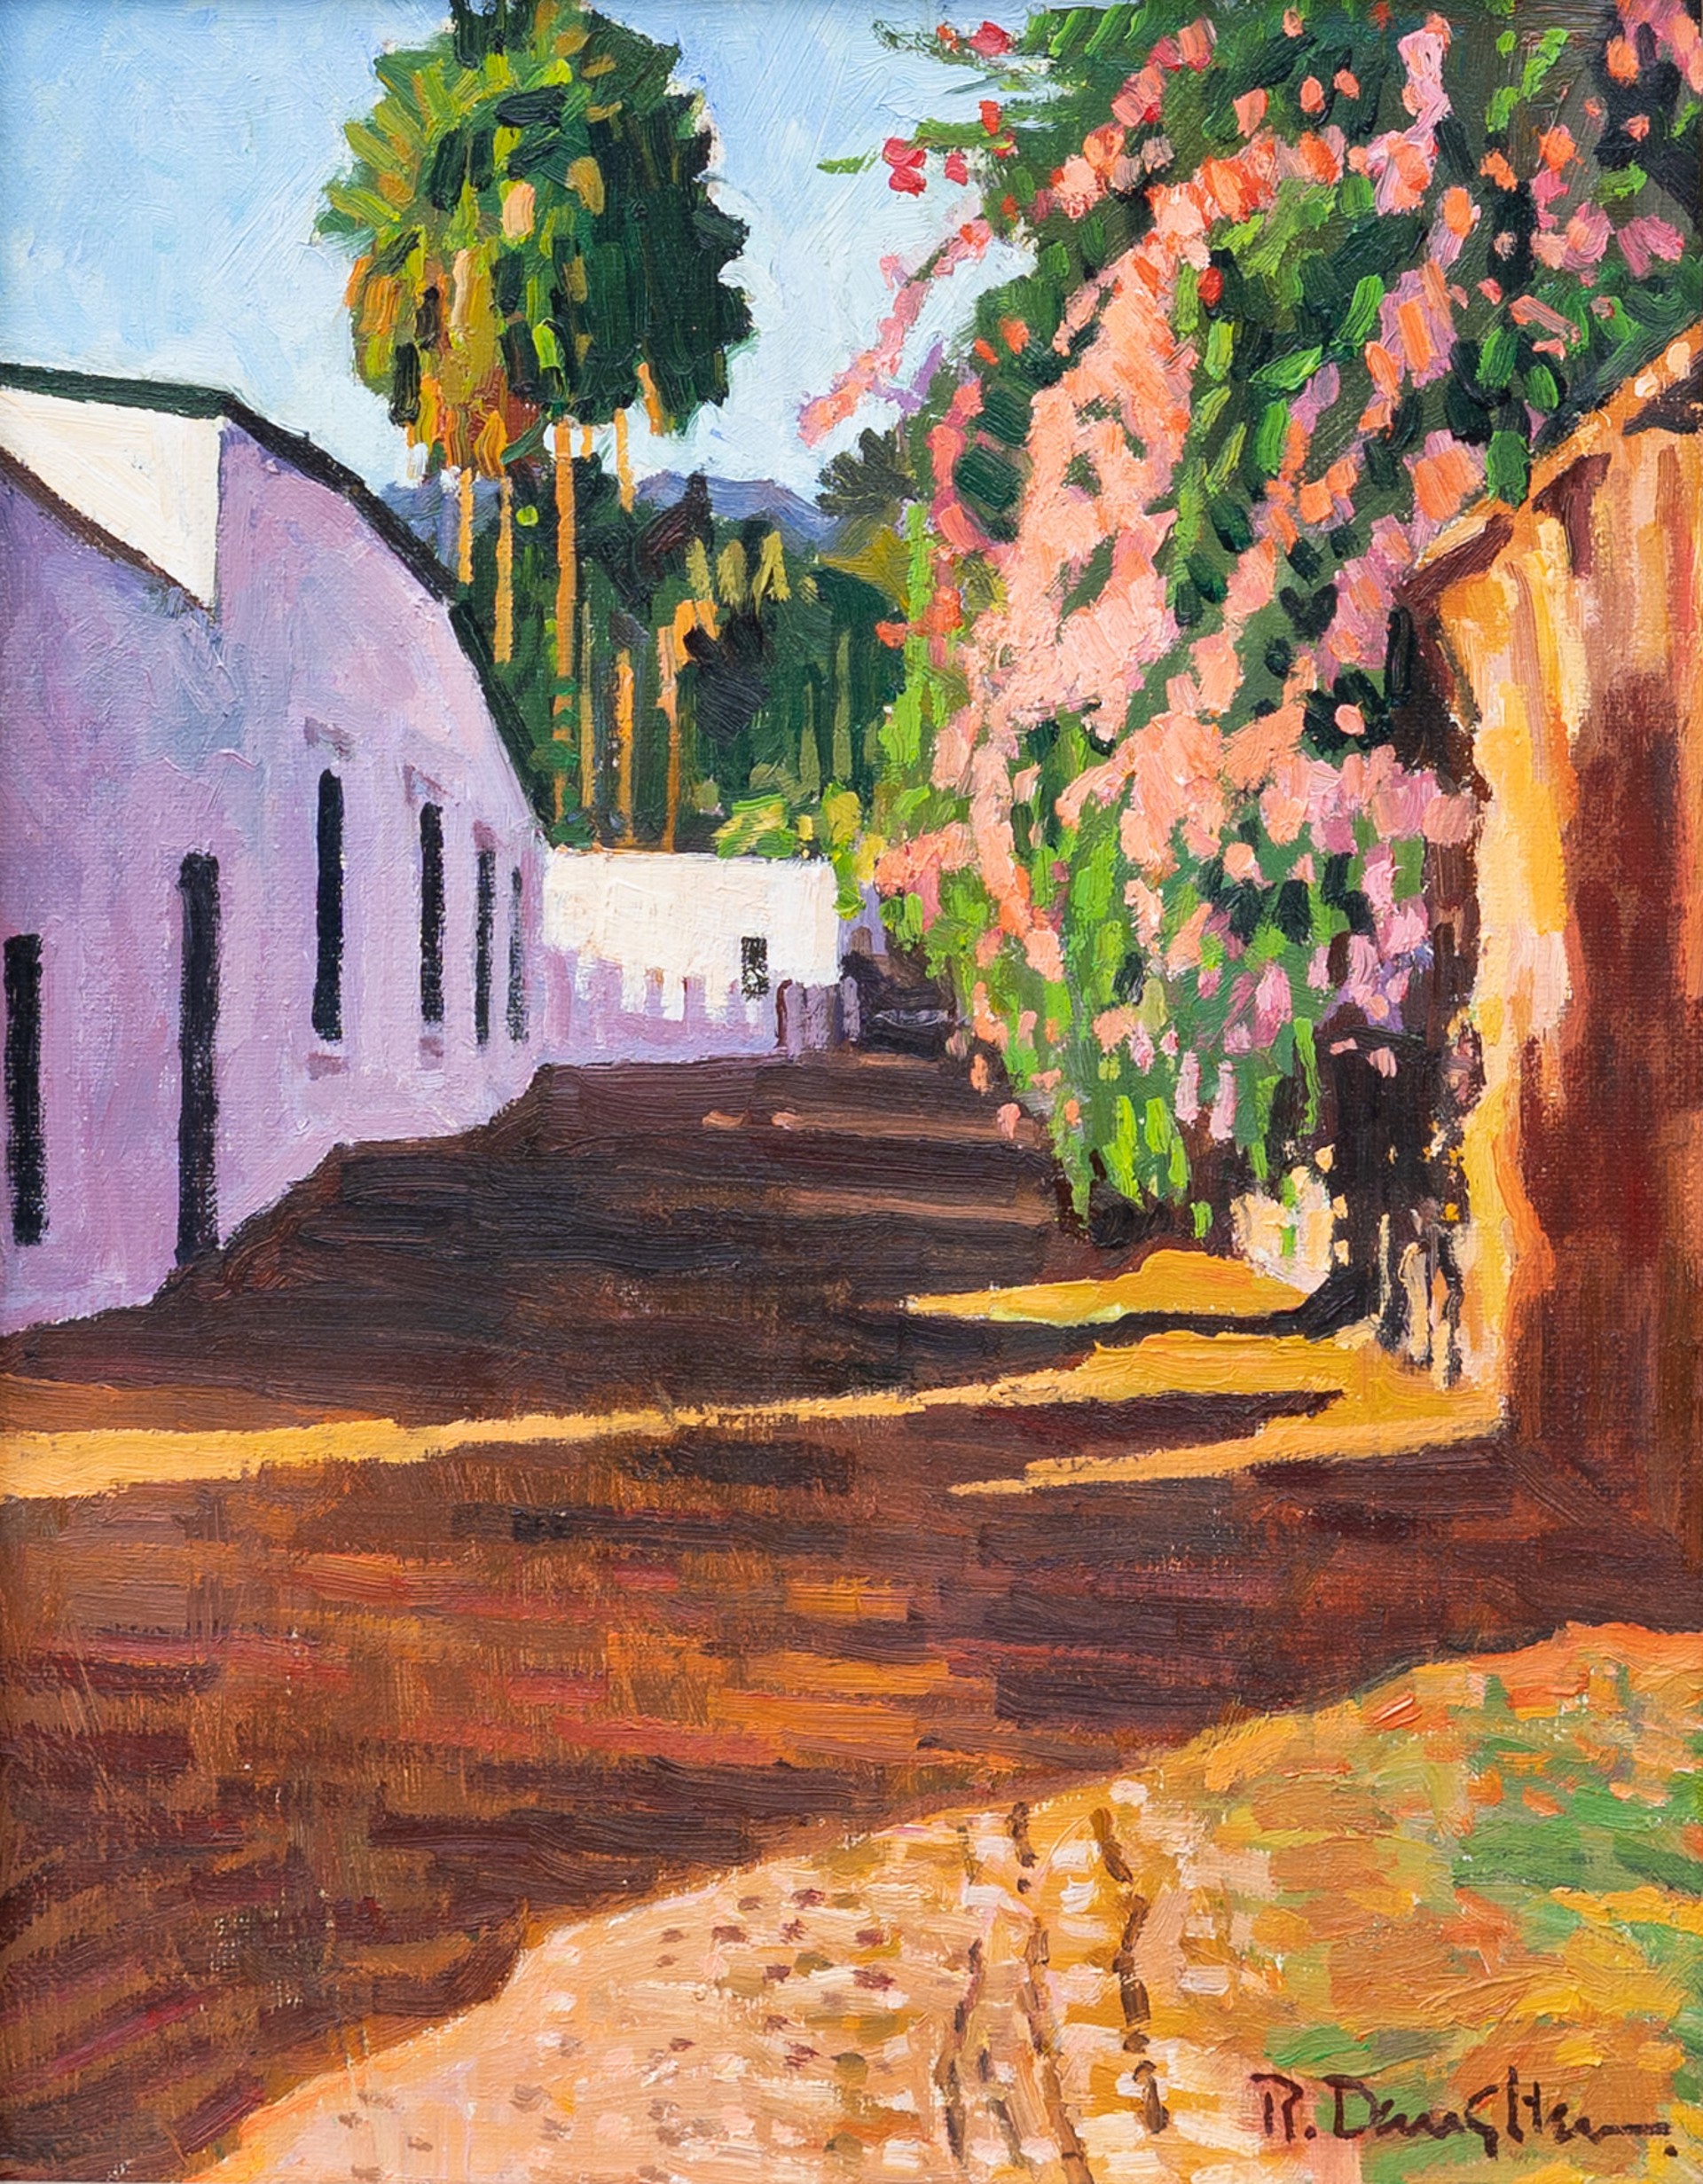 Alamosa Morning by Robert Daughters (1929-2013)